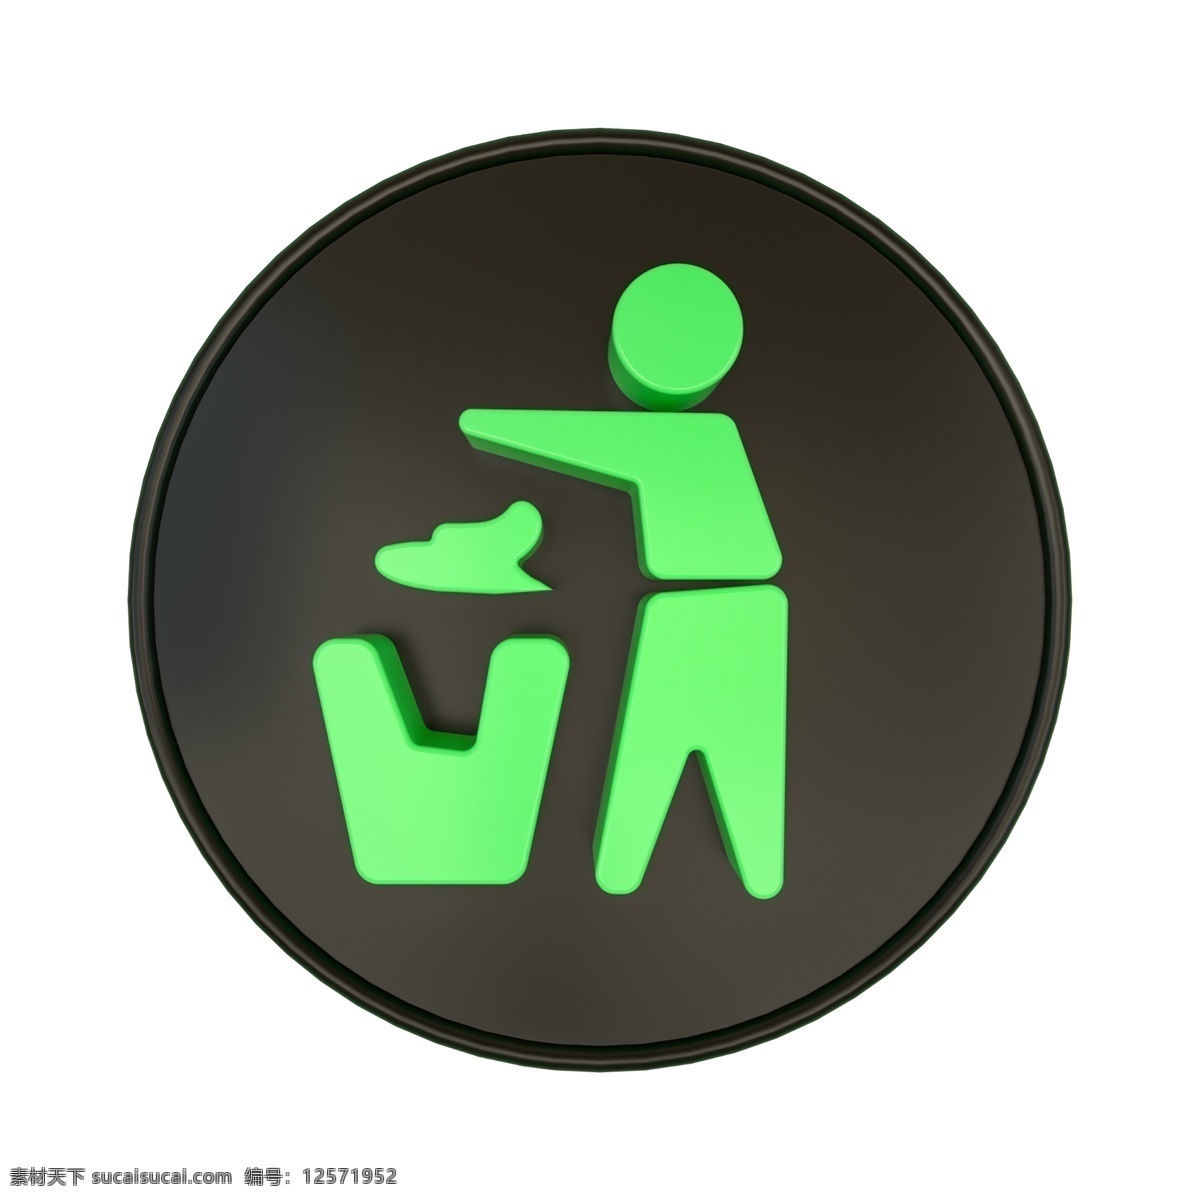 c4d 黑绿 立体 扔 垃圾 标识 3d 黑色 绿色 进 垃圾桶 公共设施标识 环保 扔垃圾